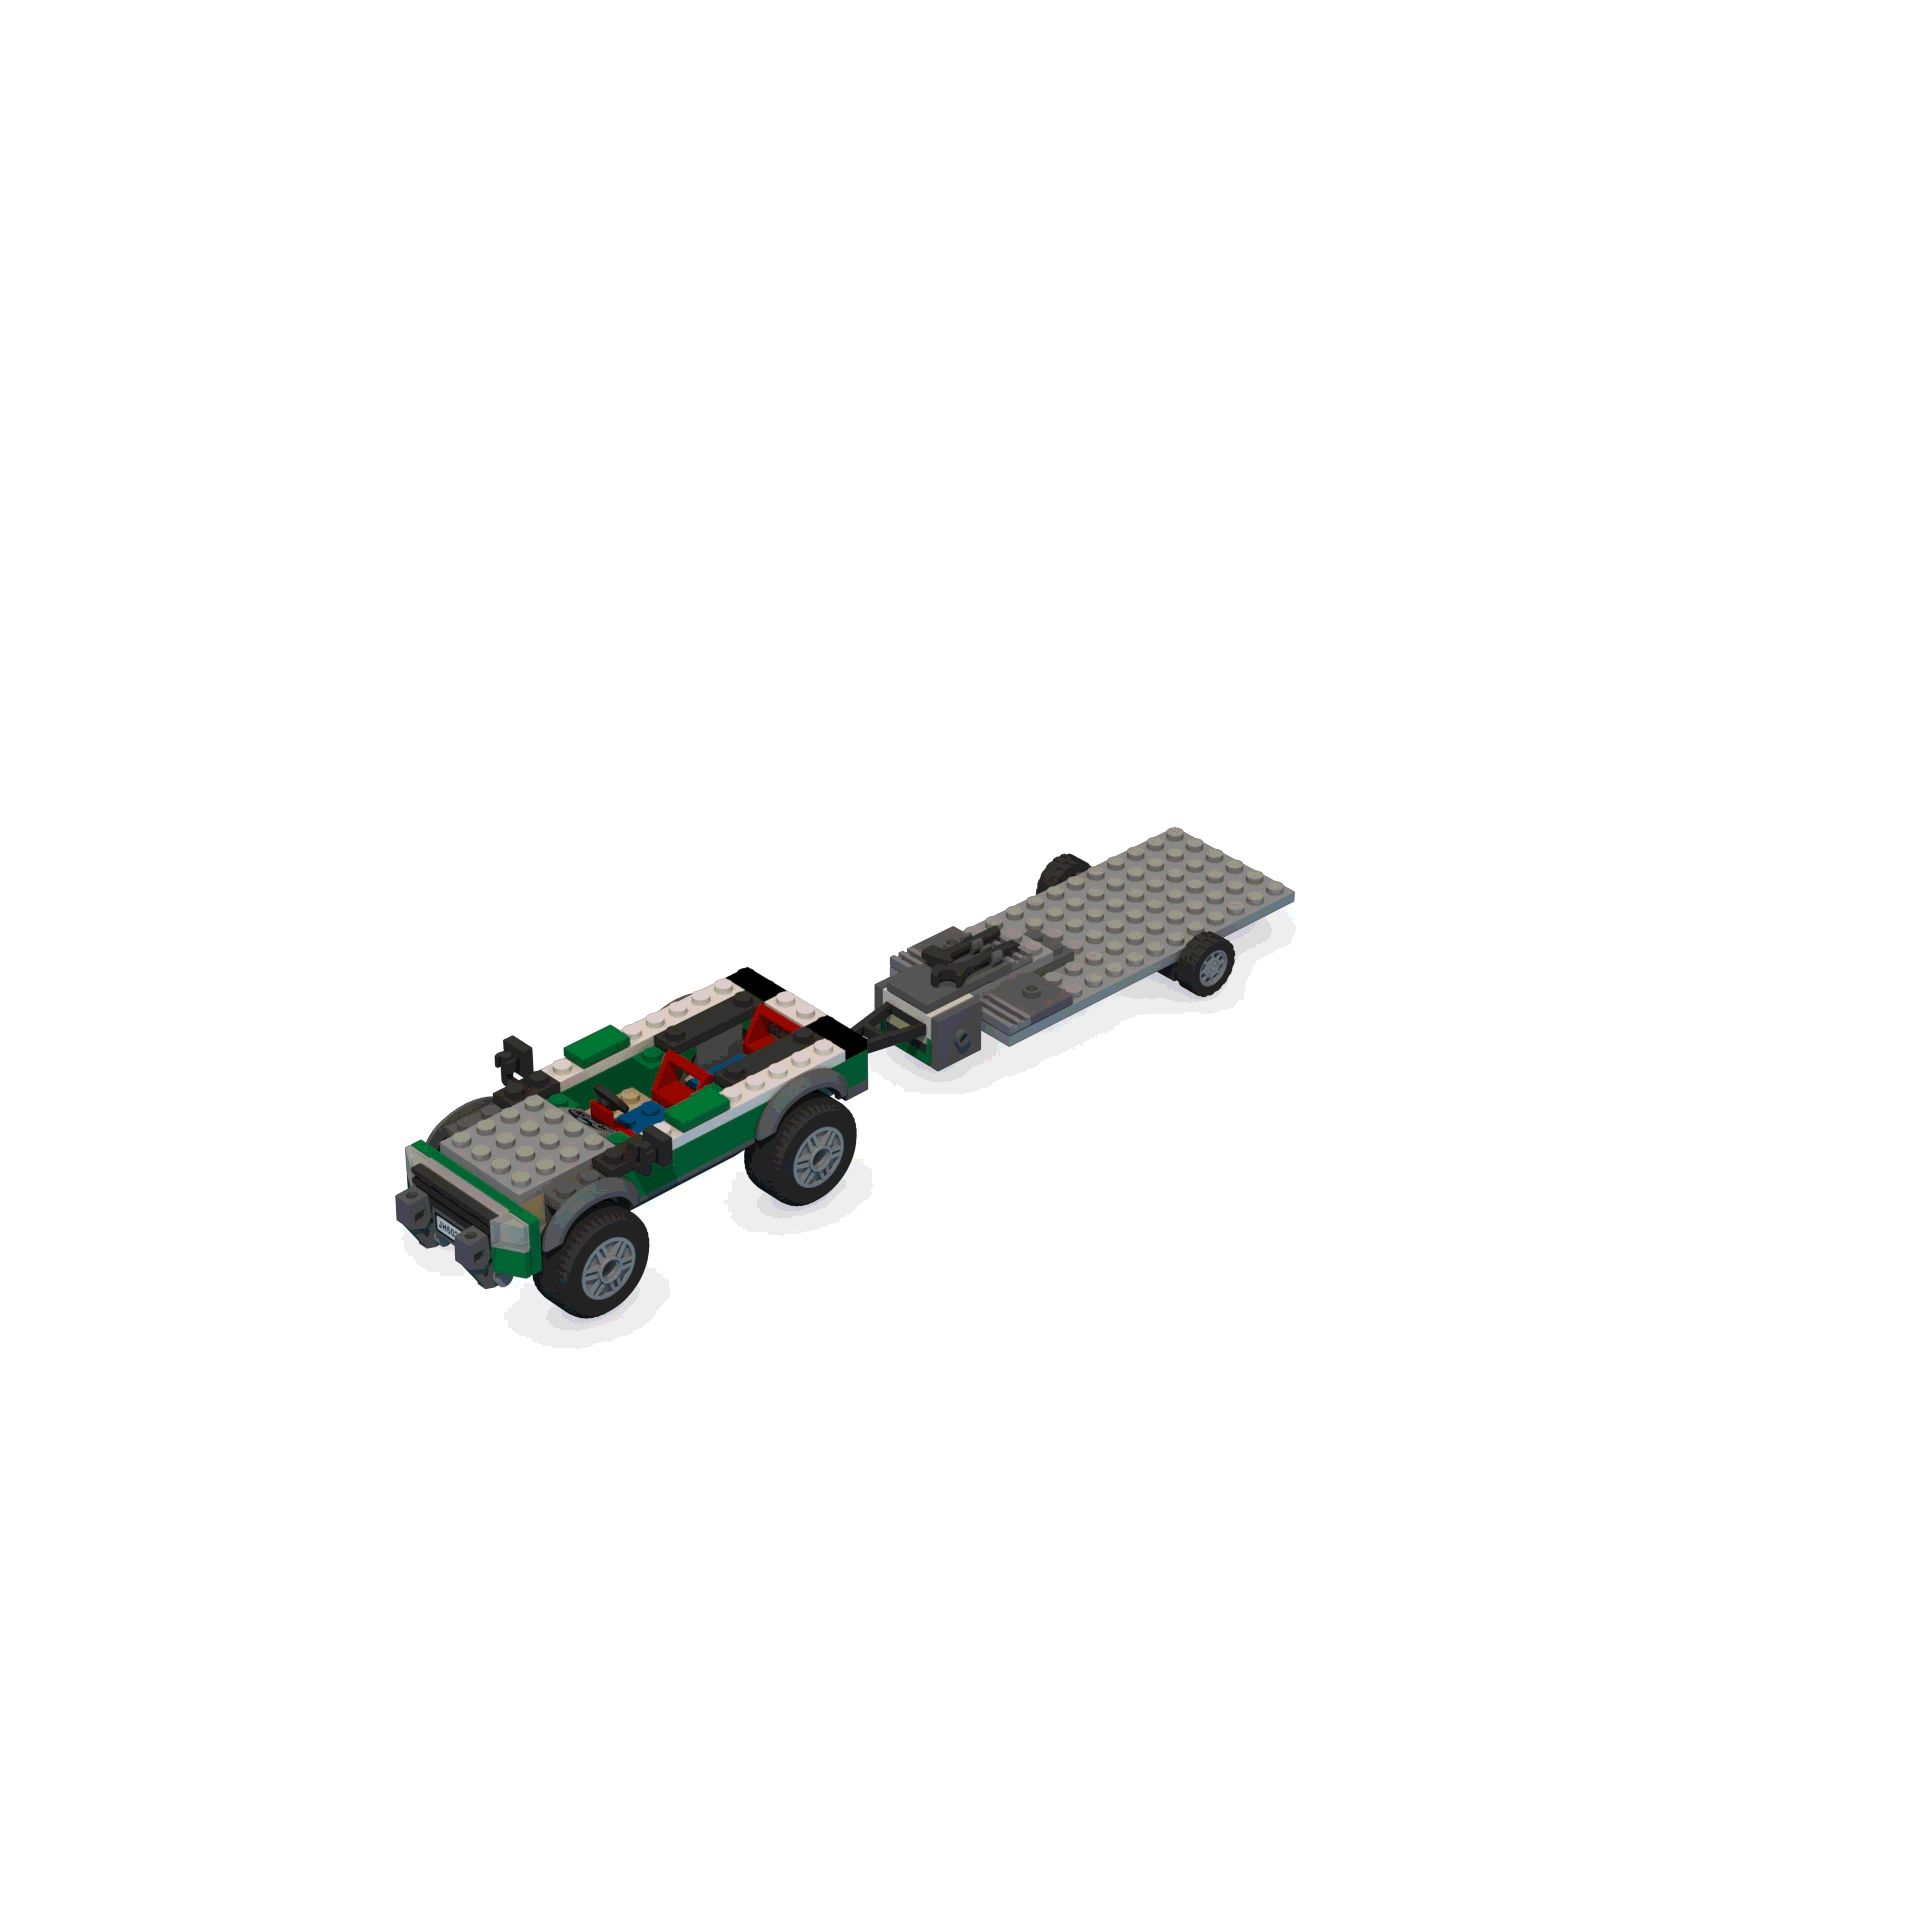 LEGO City 60288 Rennbuggy-Transporter LEGO_60288_animated_gif_8s_1x1_white.jpg